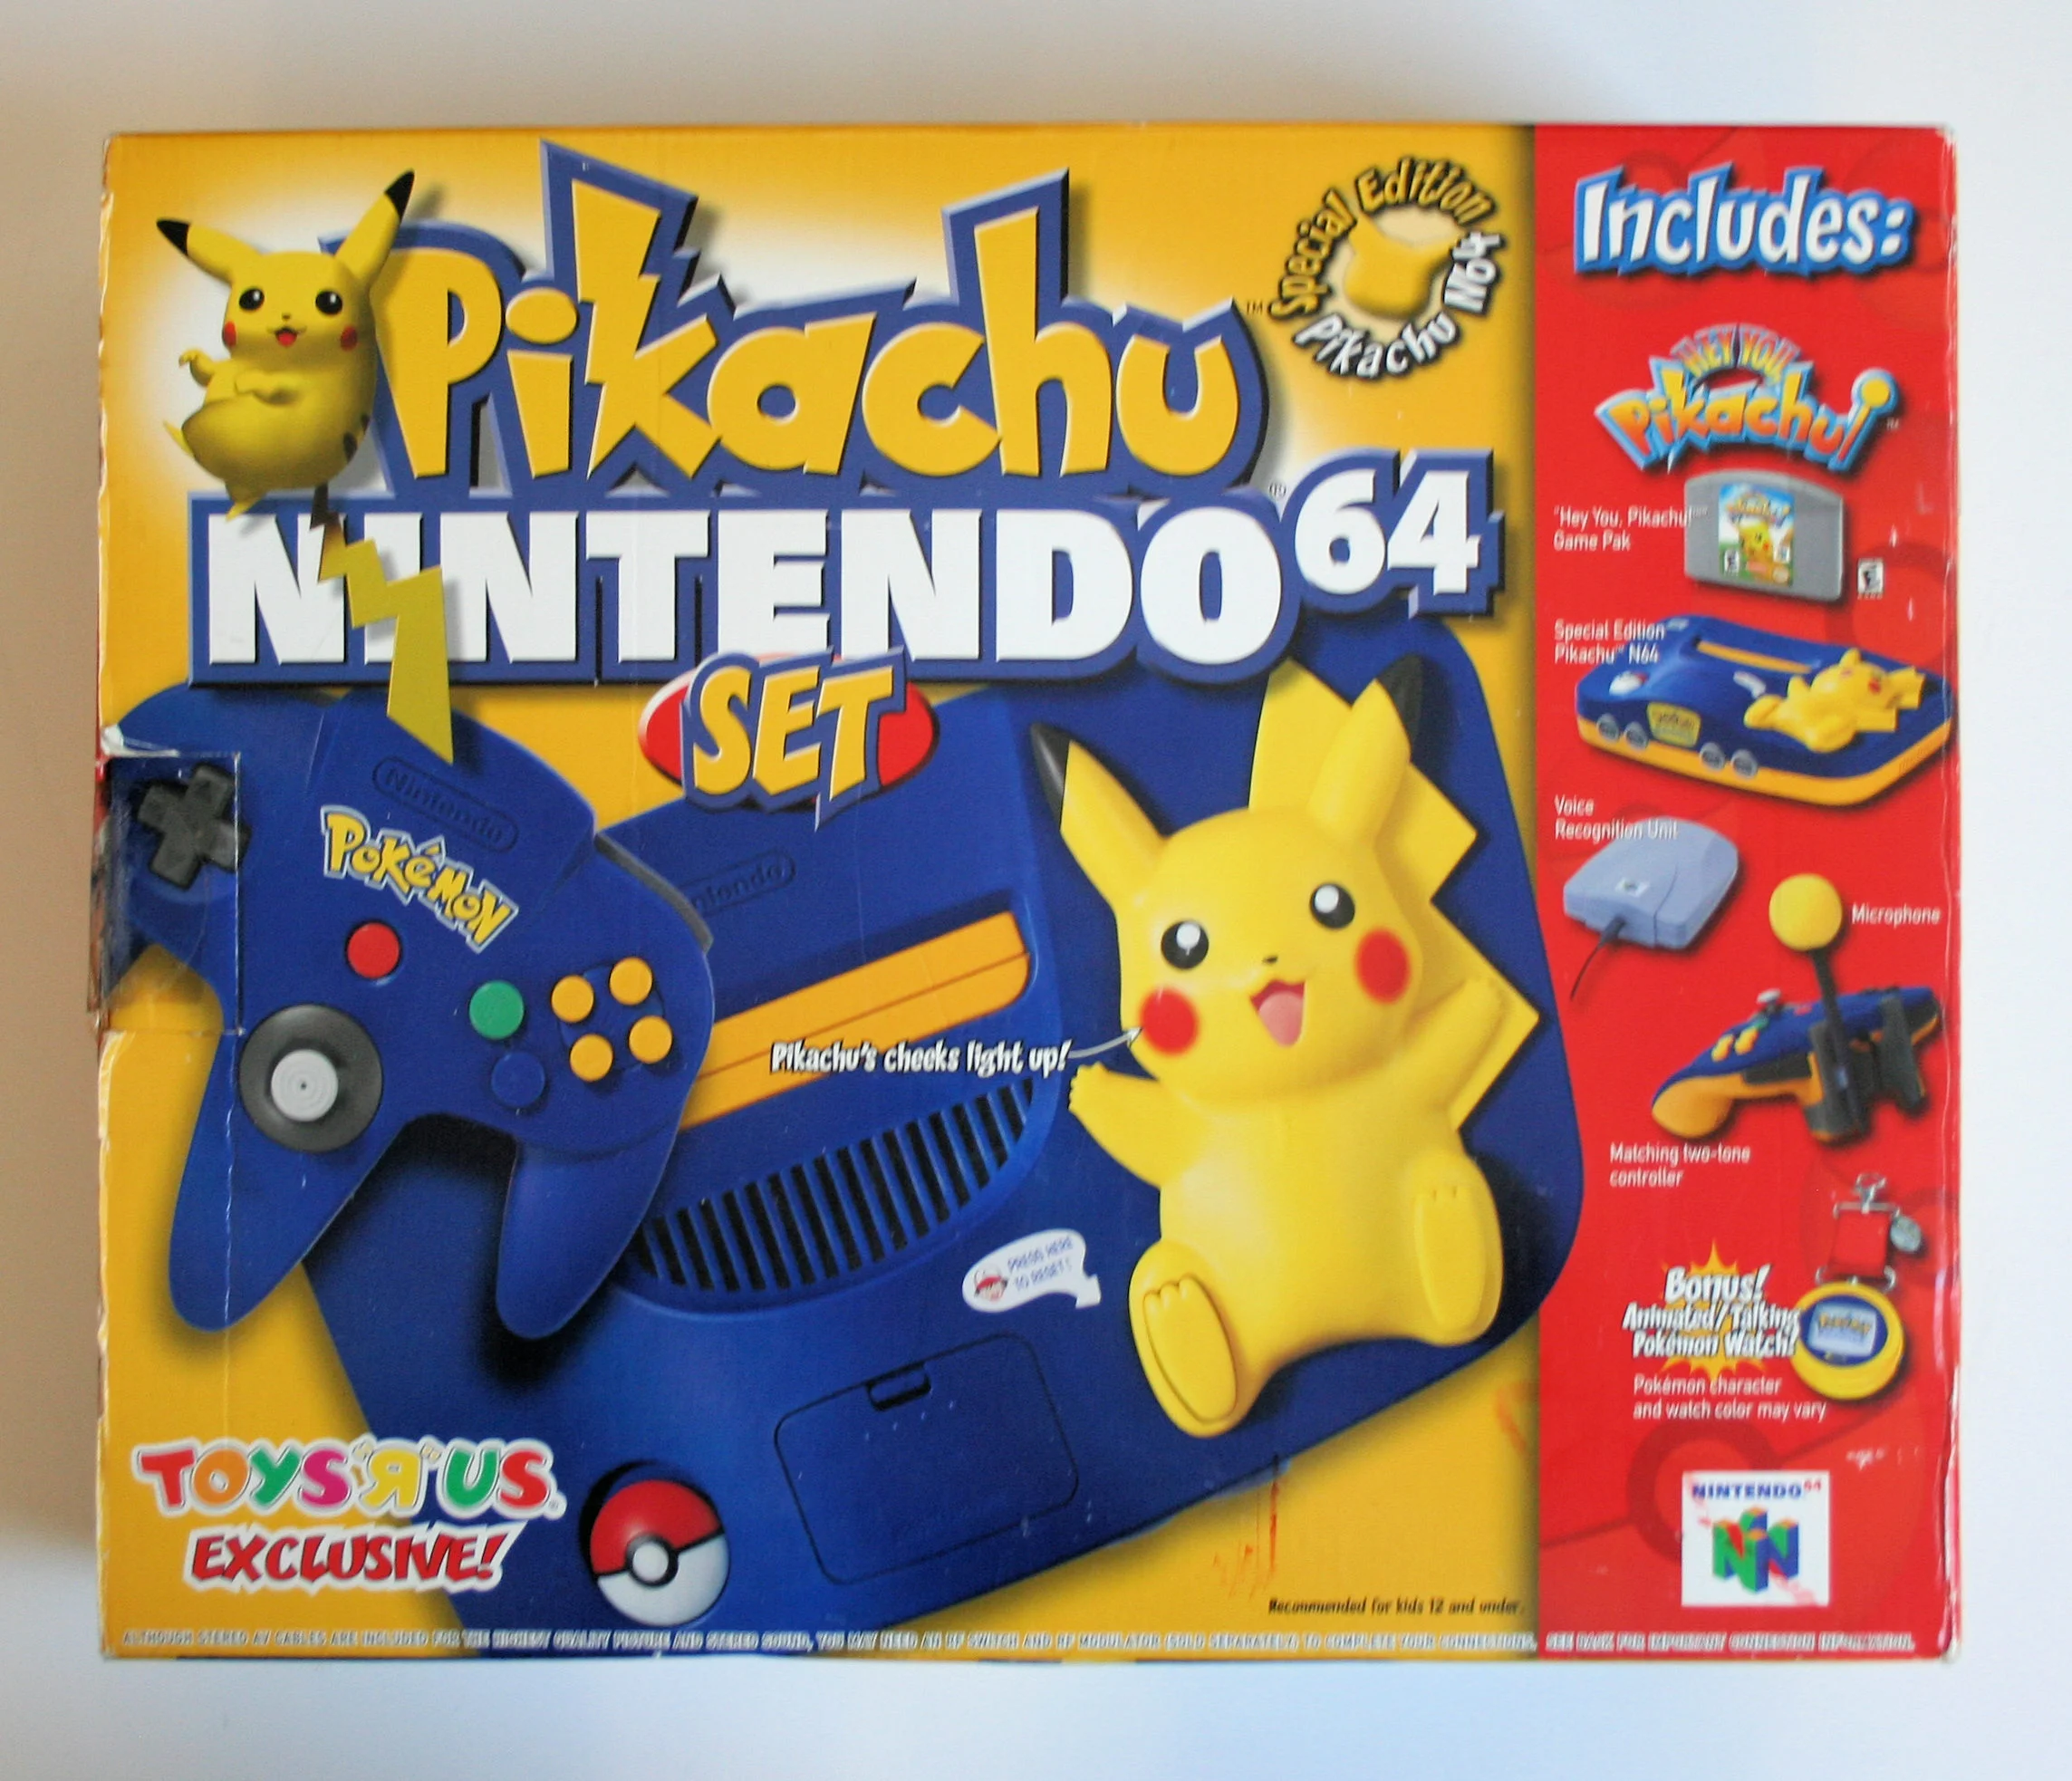  Nintendo 64 Pikachu Console [USA]